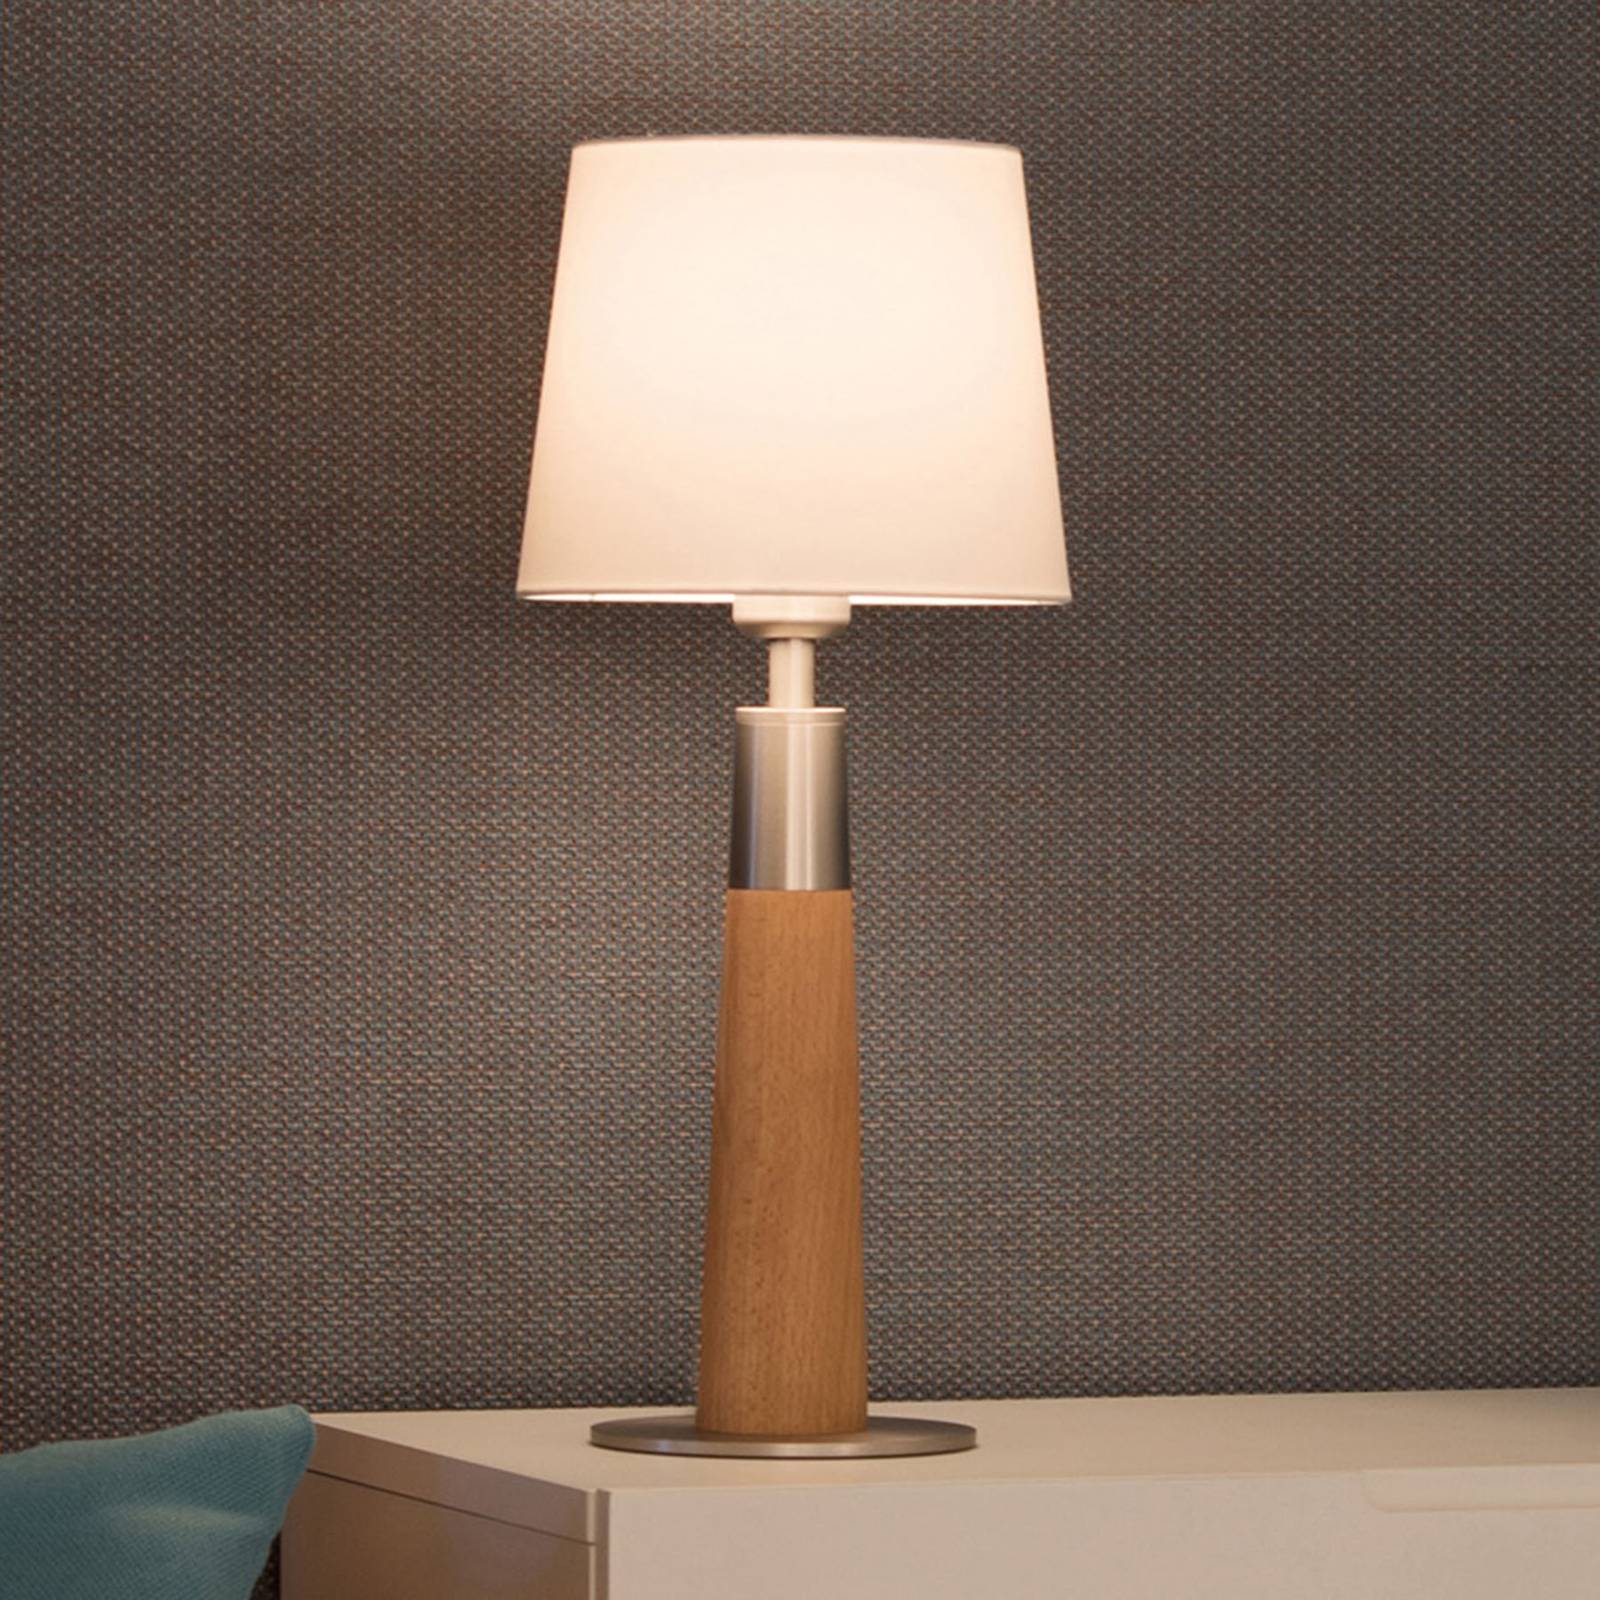 Image of HerzBlut Conico lampe blanche, chêne huilé, 44 cm 4021273016204